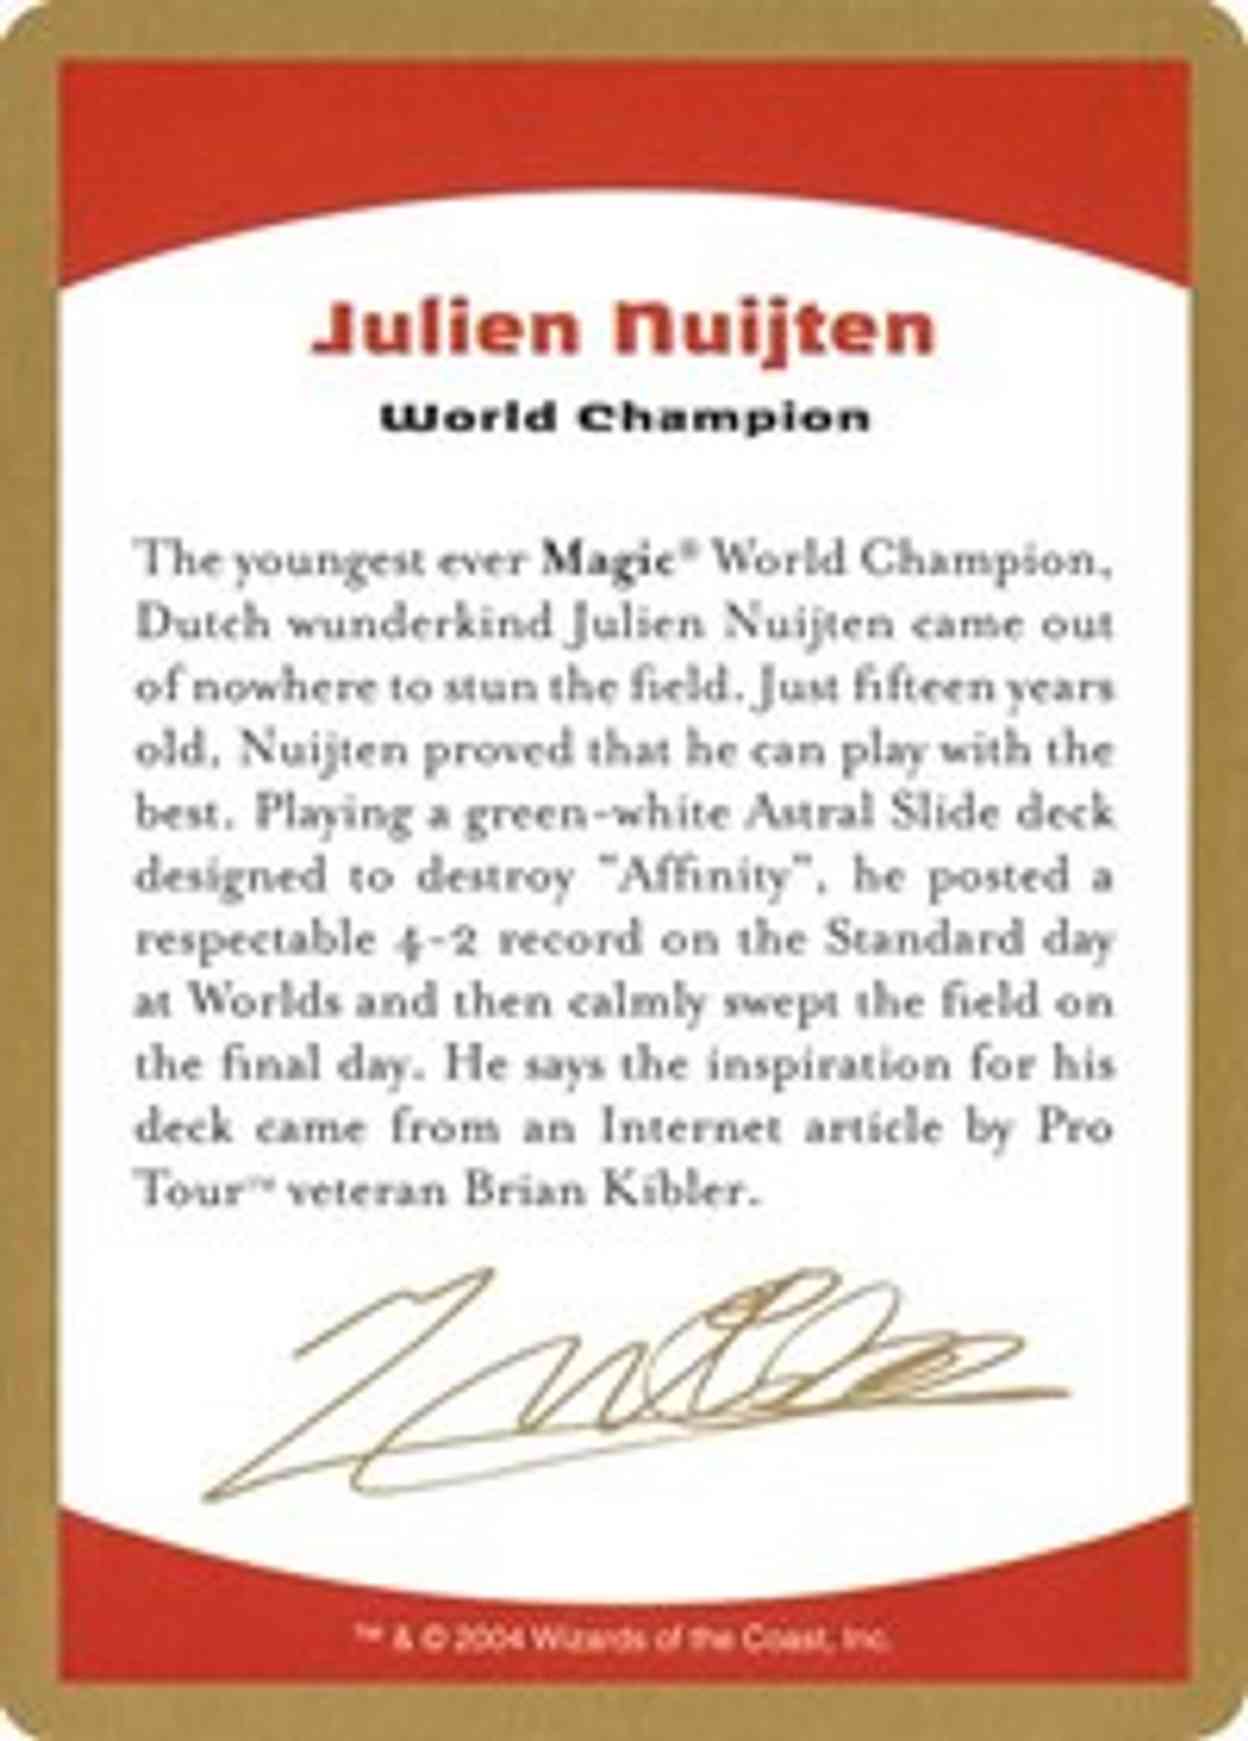 2004 Julien Nuijten Biography Card magic card front